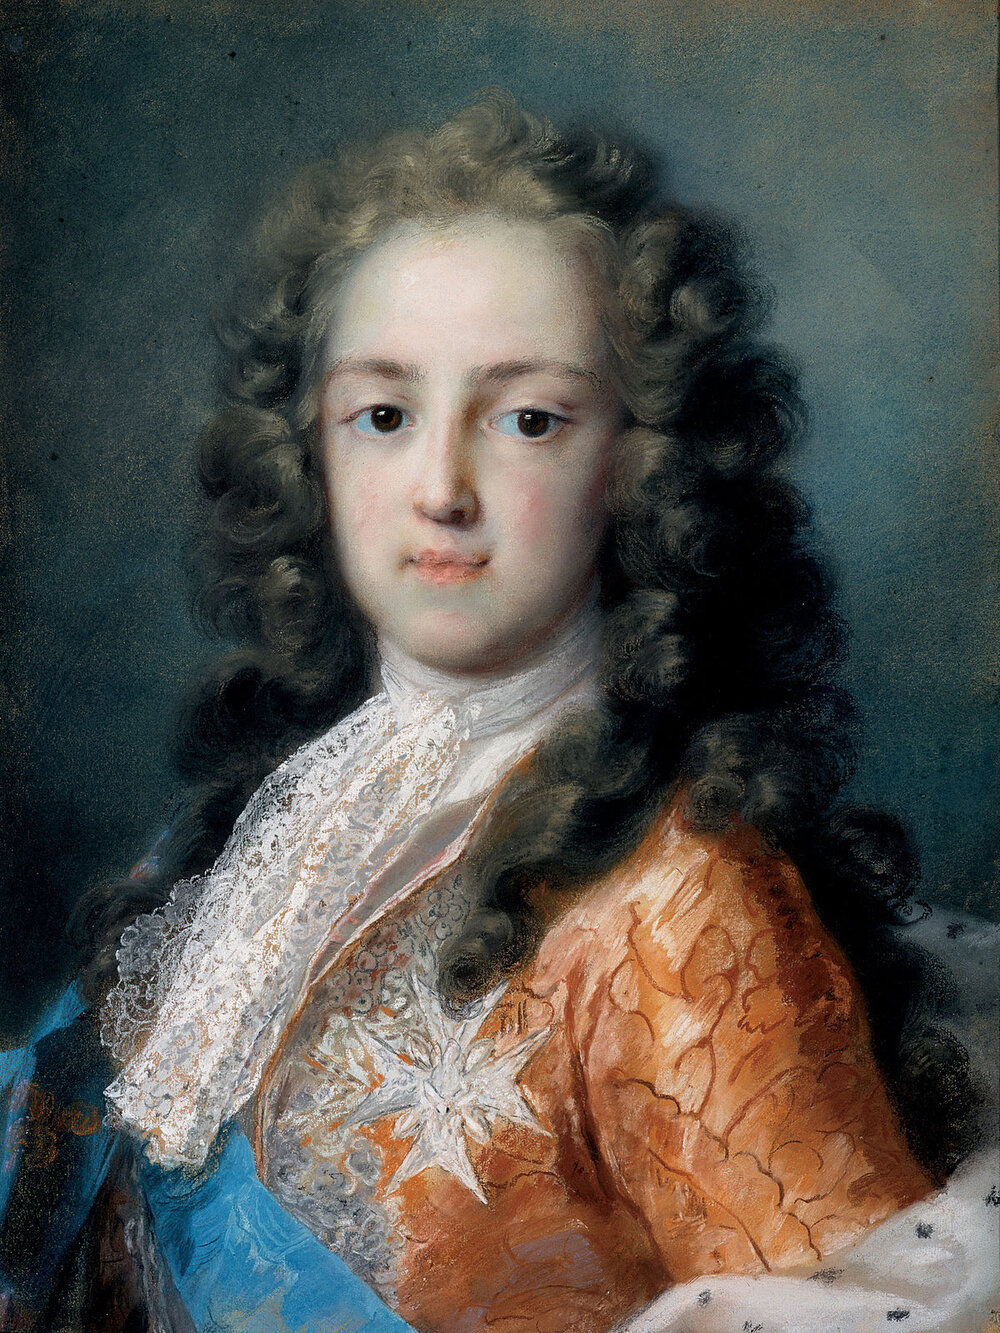 Rosalba_Carriera_-_Louis_XV_of_France_as_Dauphin_(1720-1721)_-_Google_Art_Project.jpg